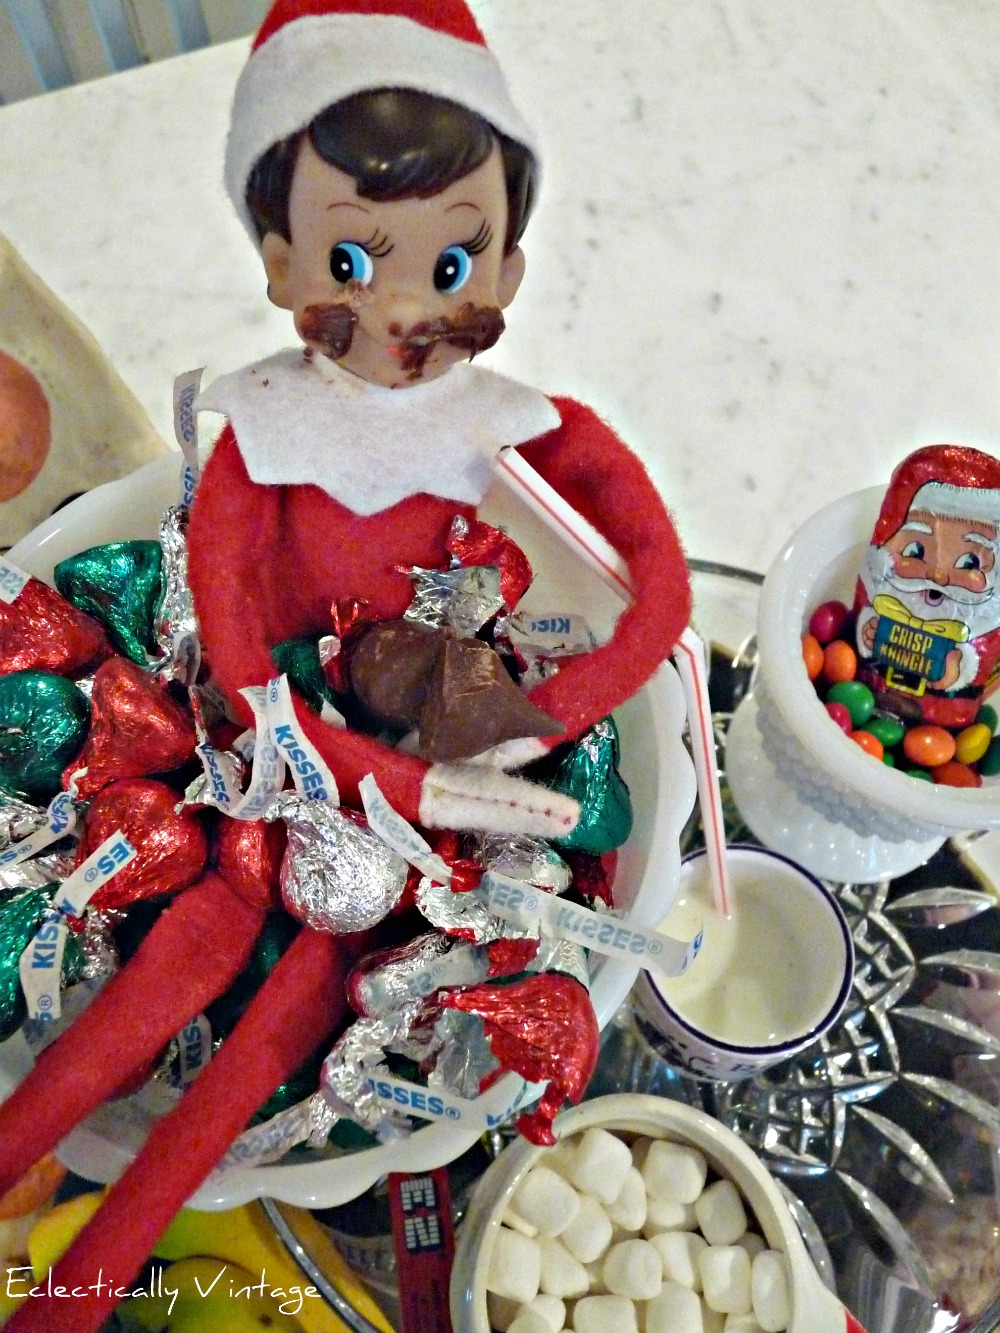 18 Hysterical Elf on the Shelf ideas! #elfontheshelf kellyelko.com This little Elf on the Shelf is on a sugar high after raiding the candy jar!